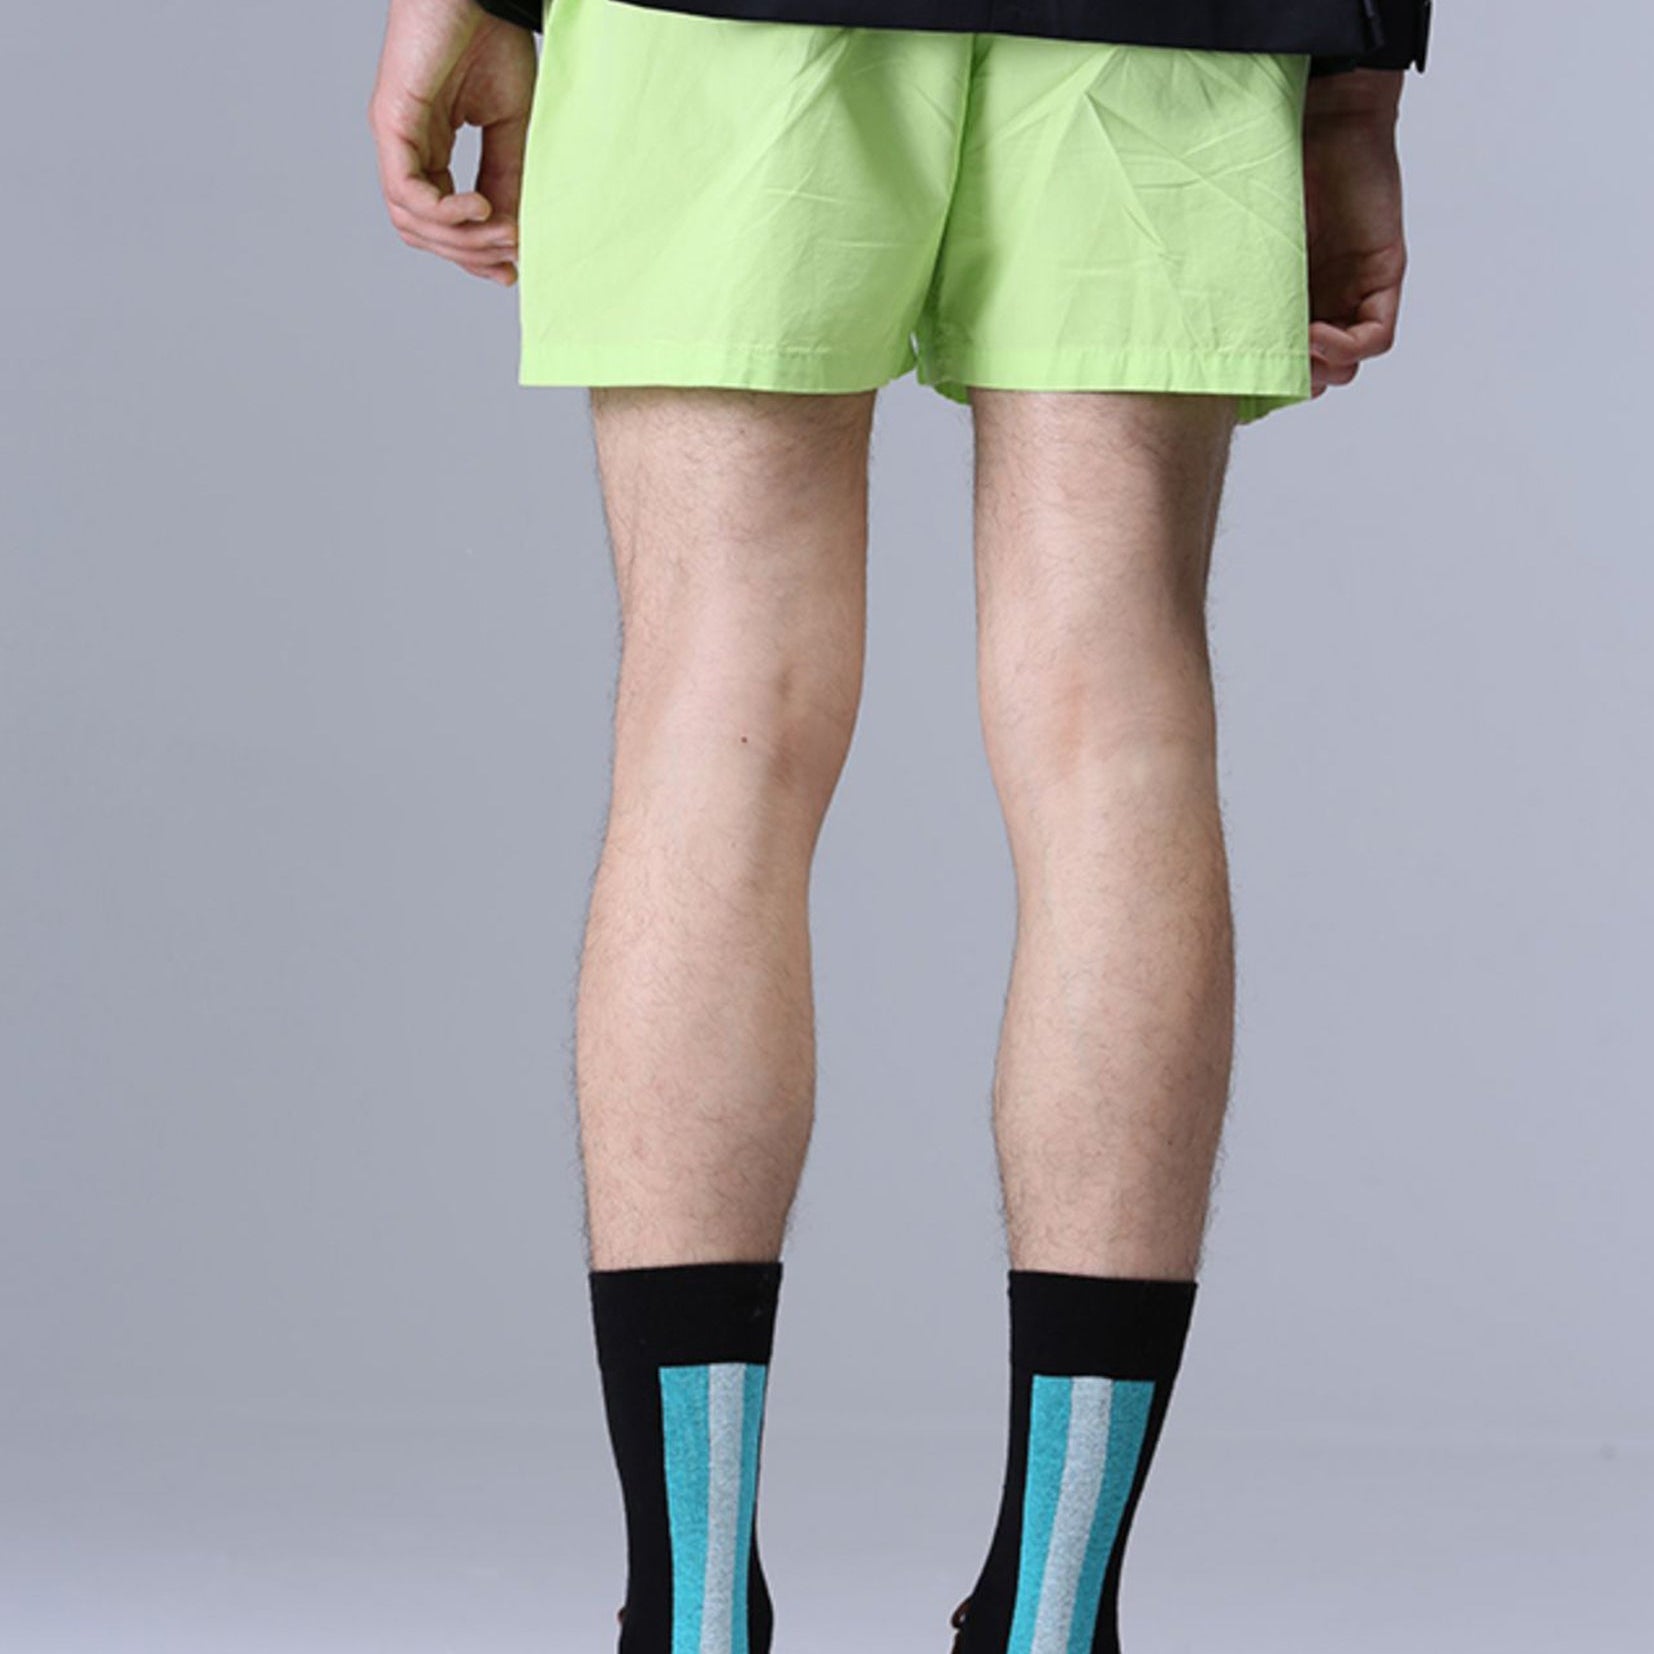 Colour collage mid-calf socks - green